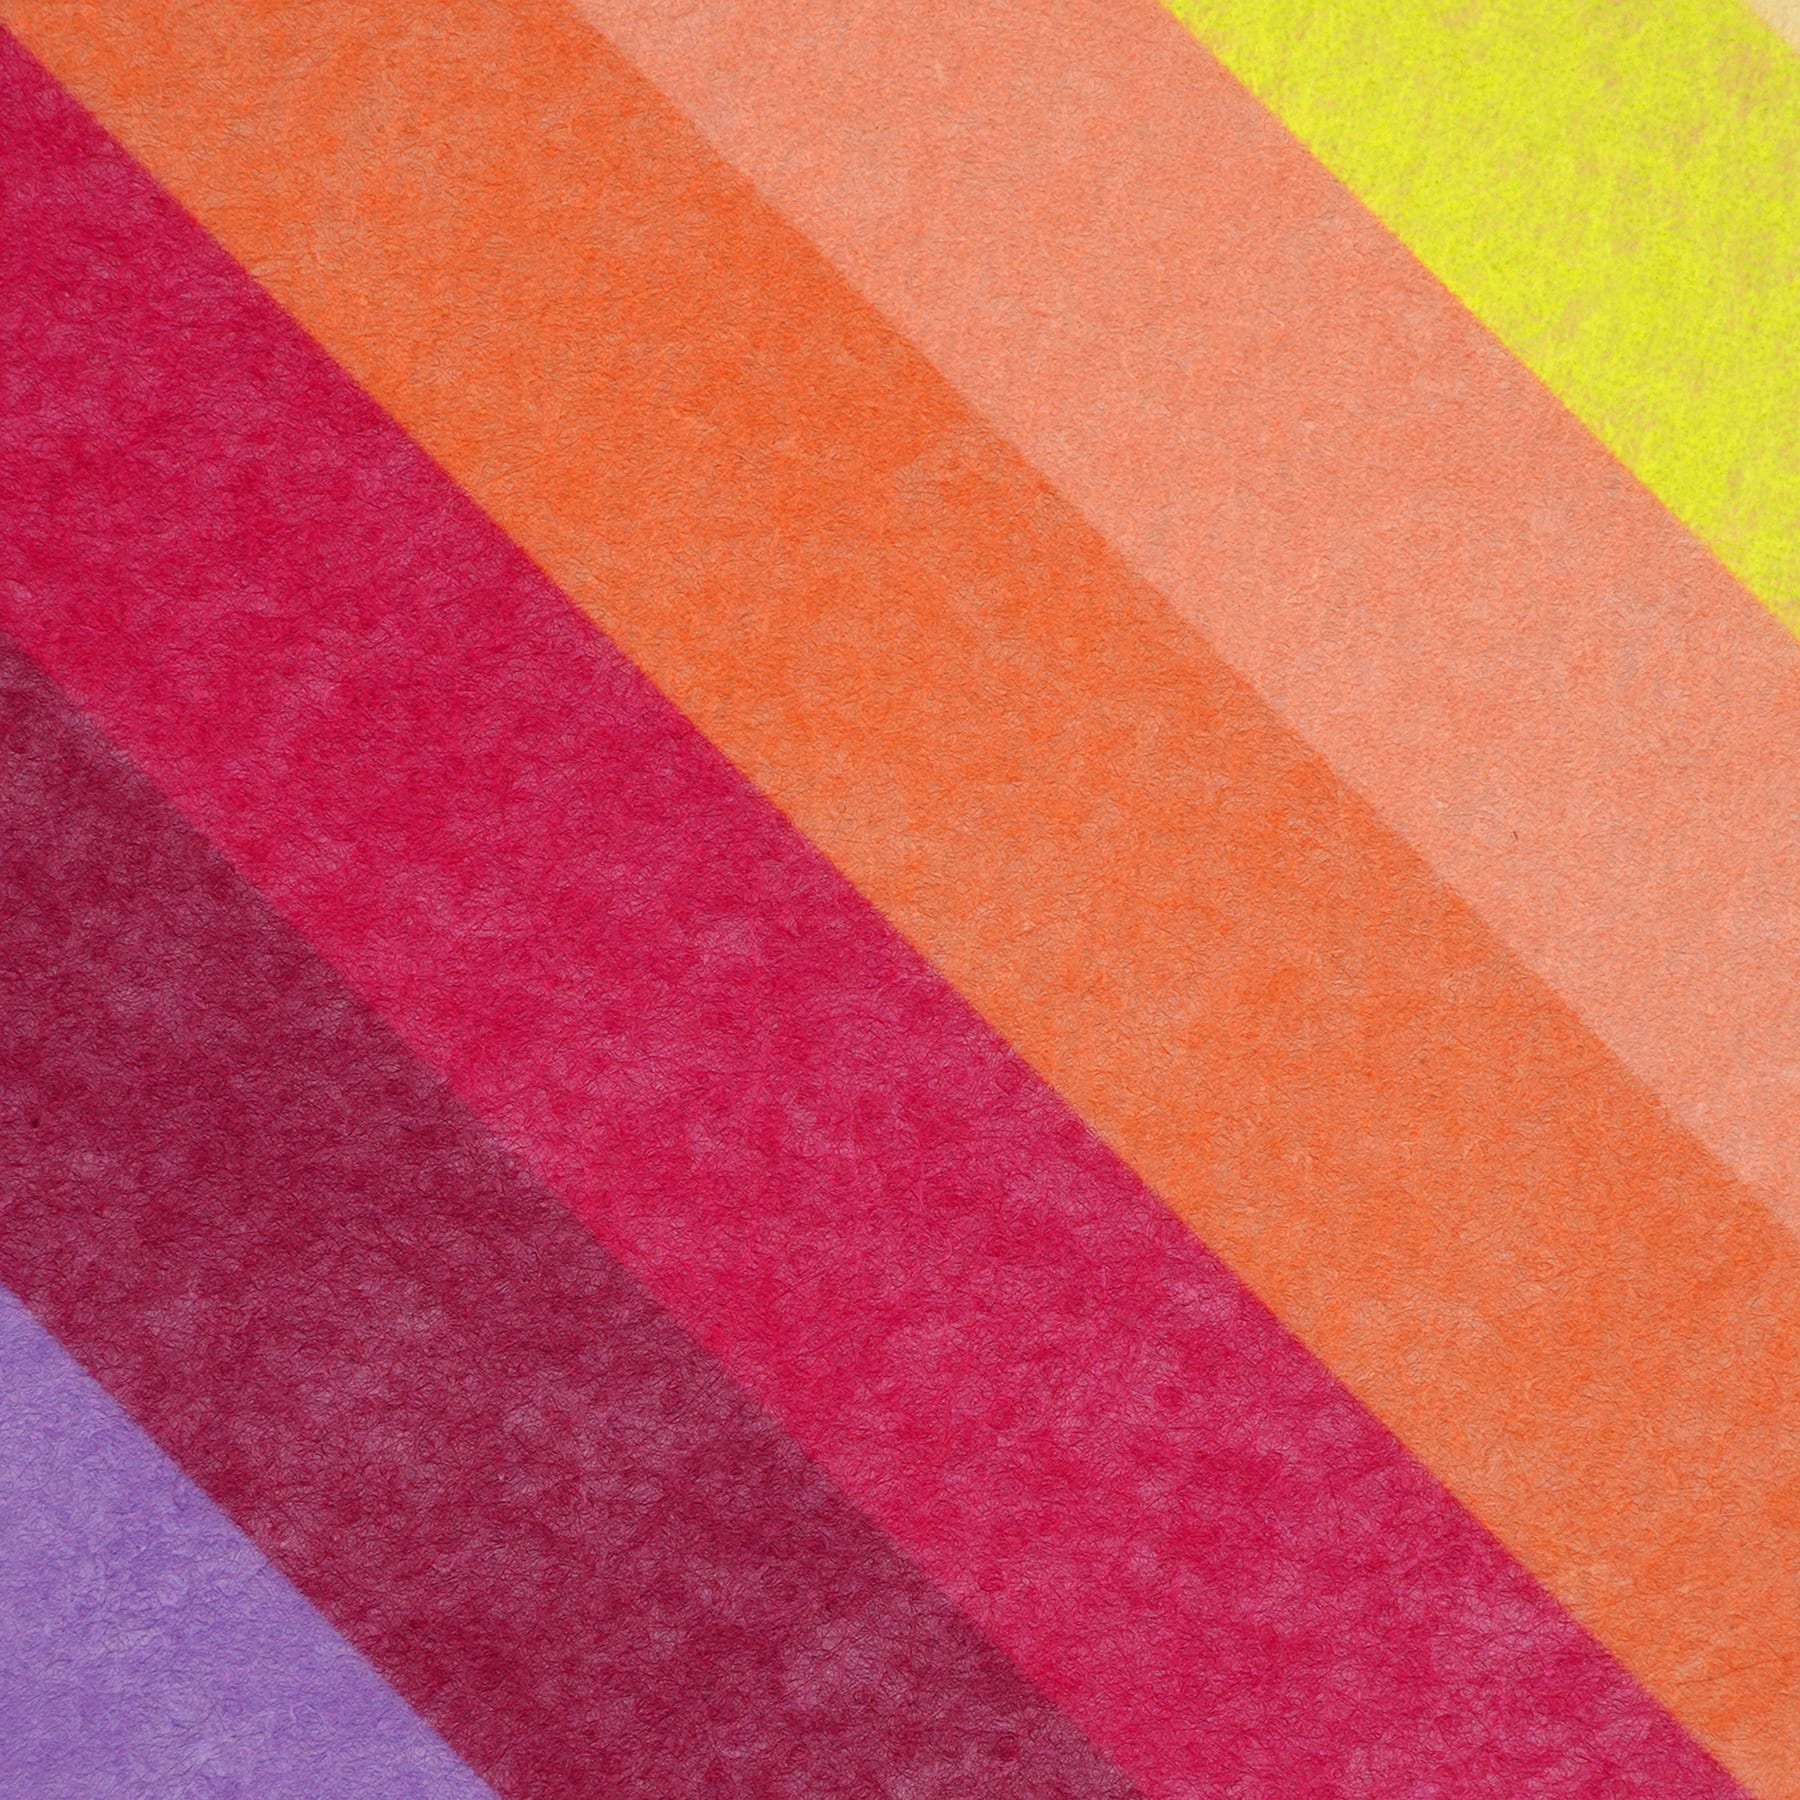 Baker Ross Rainbow Colours Self-Adhesive Felt Sheets (Pack of 20) Craft Embellishments